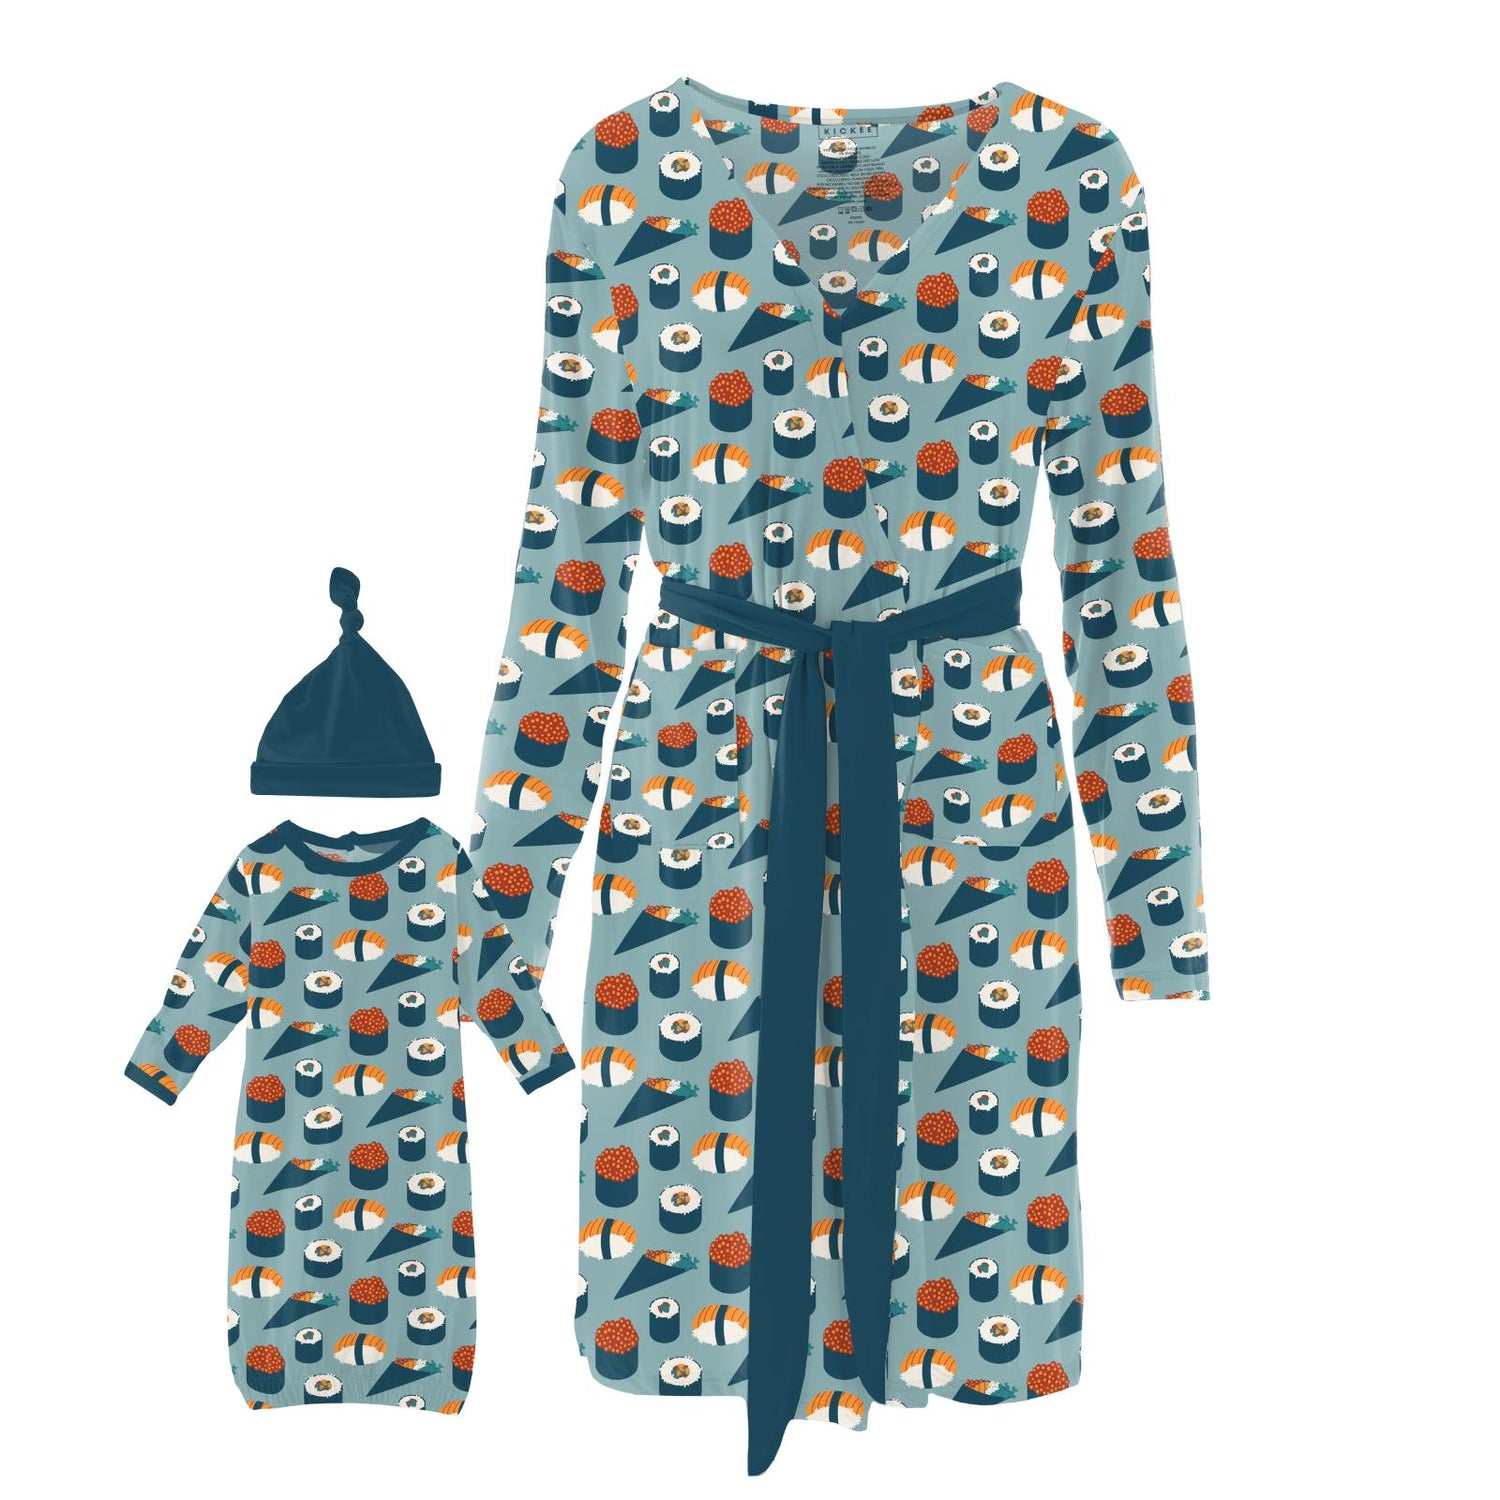 Women's Print Maternity/Nursing Robe & Layette Gown Set in Jade Sushi